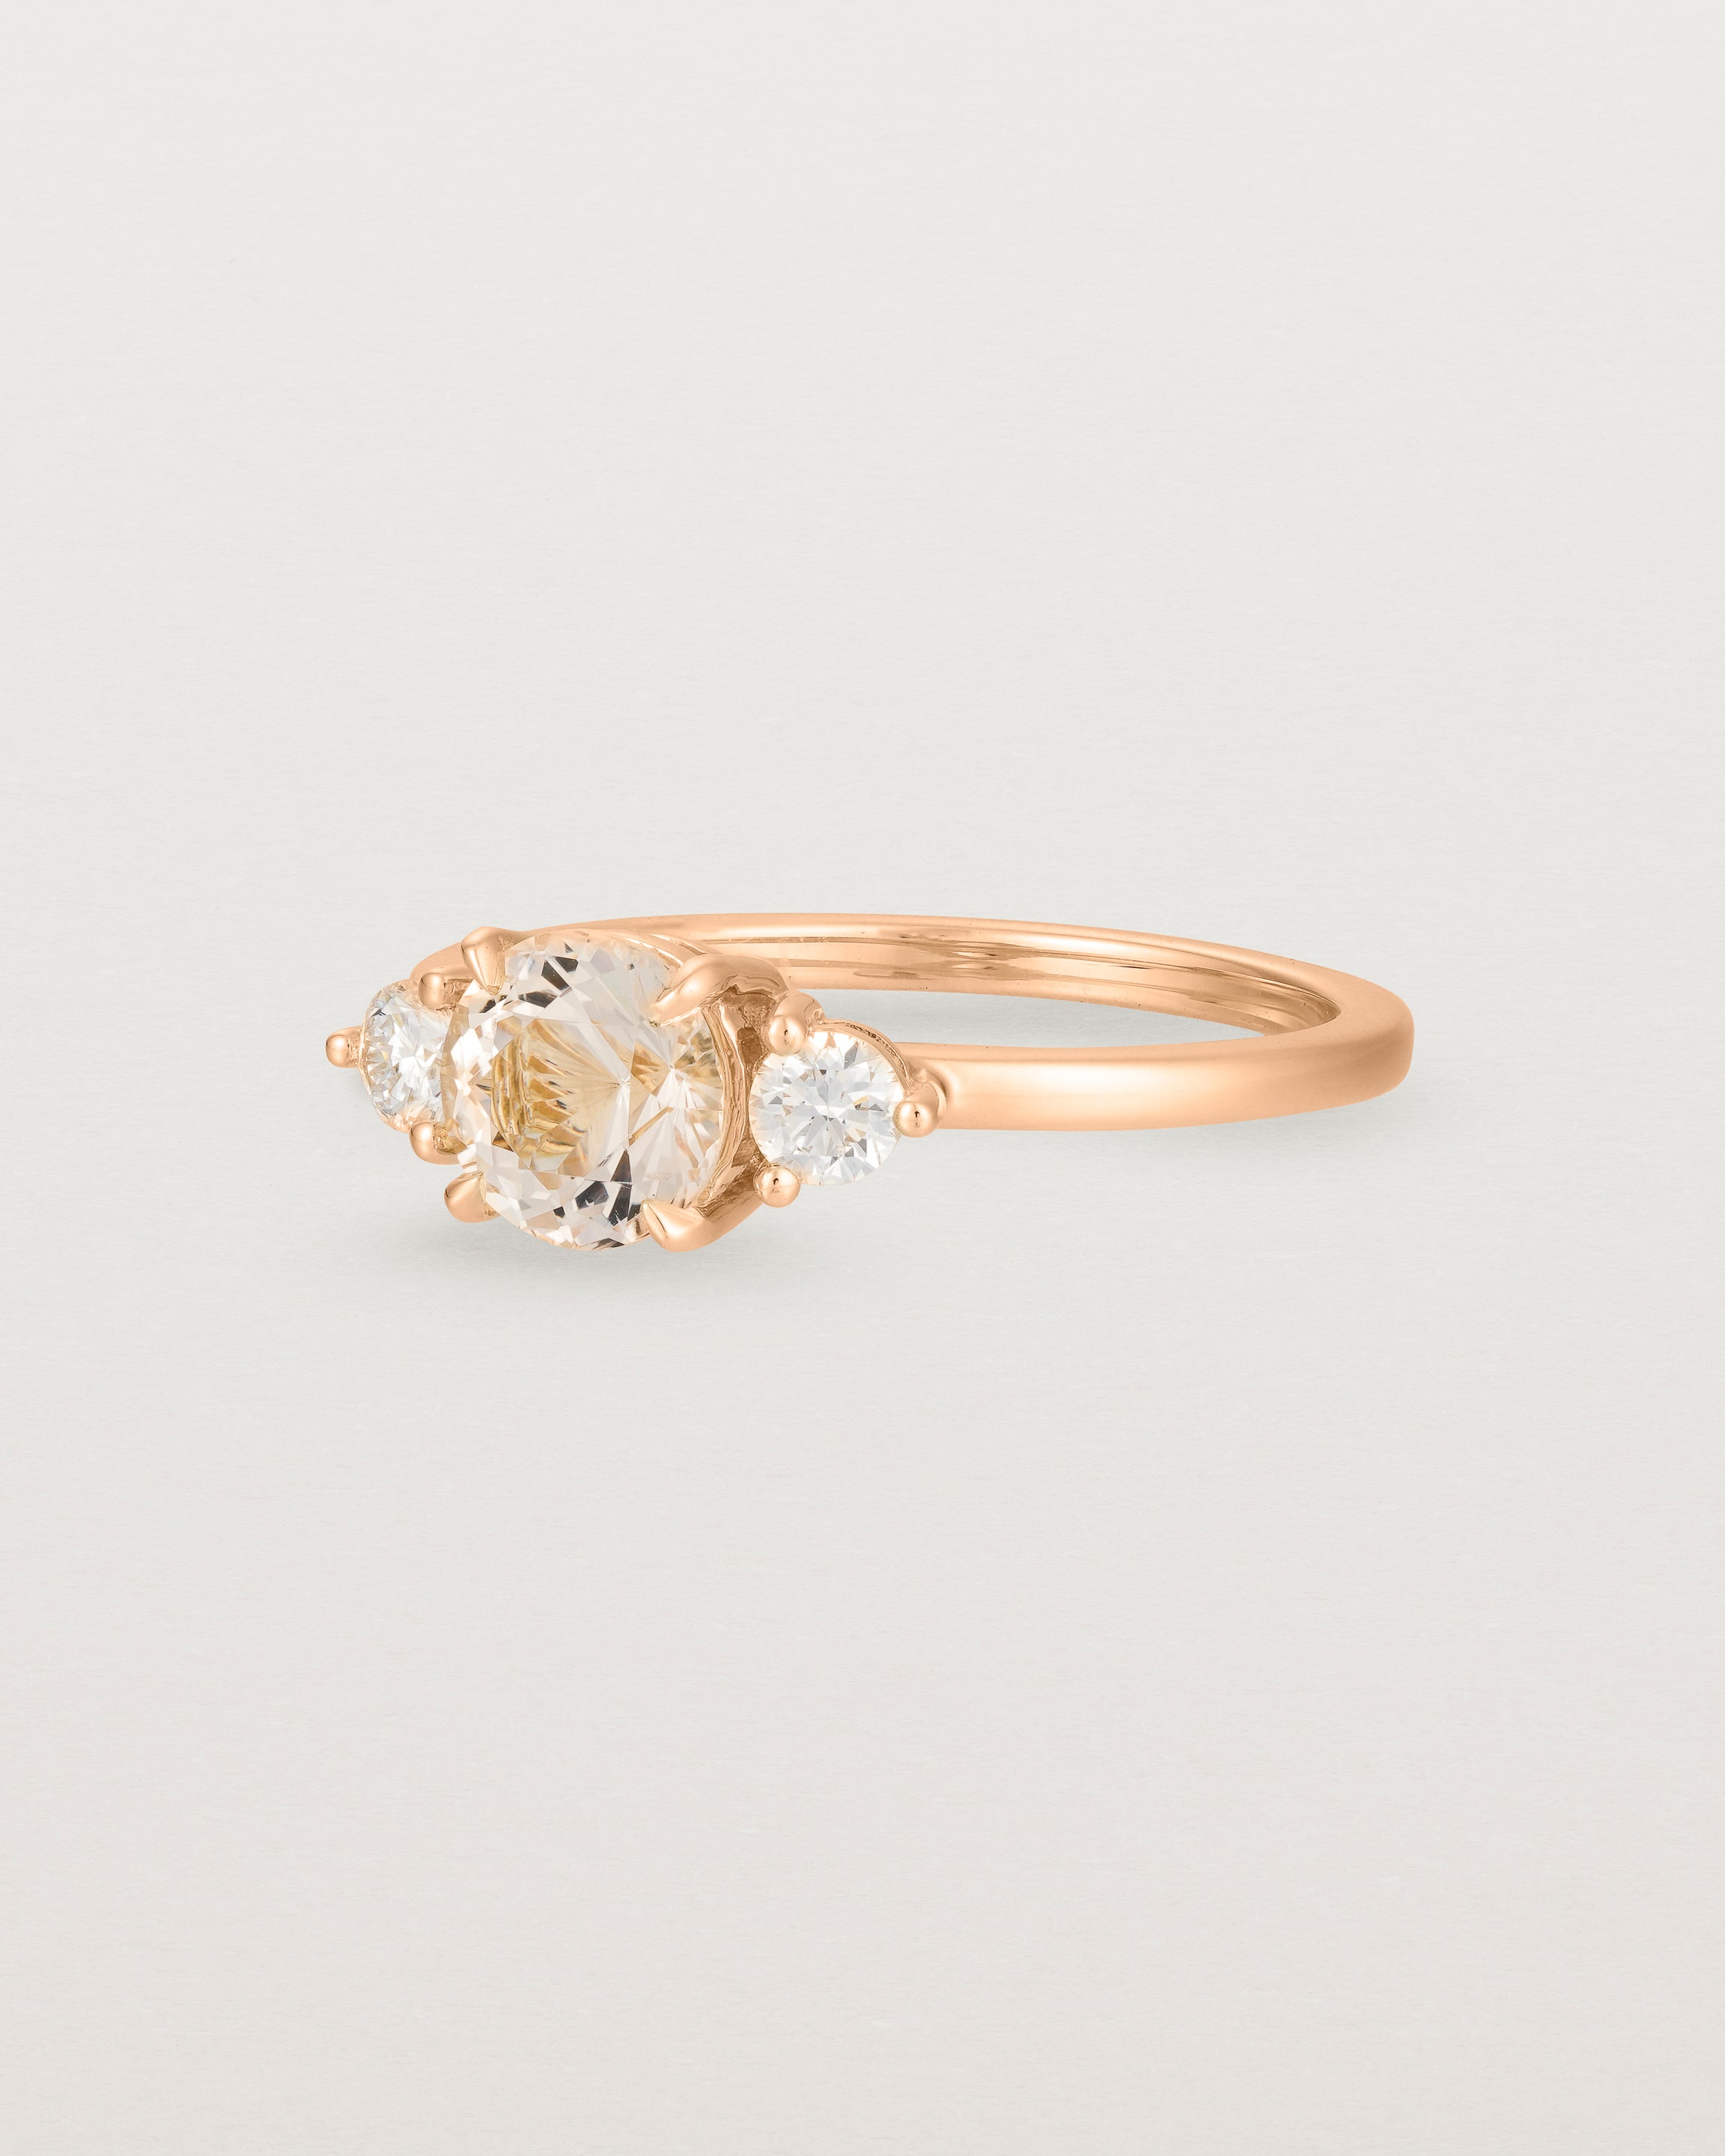 Angled view of the Petite Una Round Trio Ring | Morganite & Diamonds | Rose Gold.